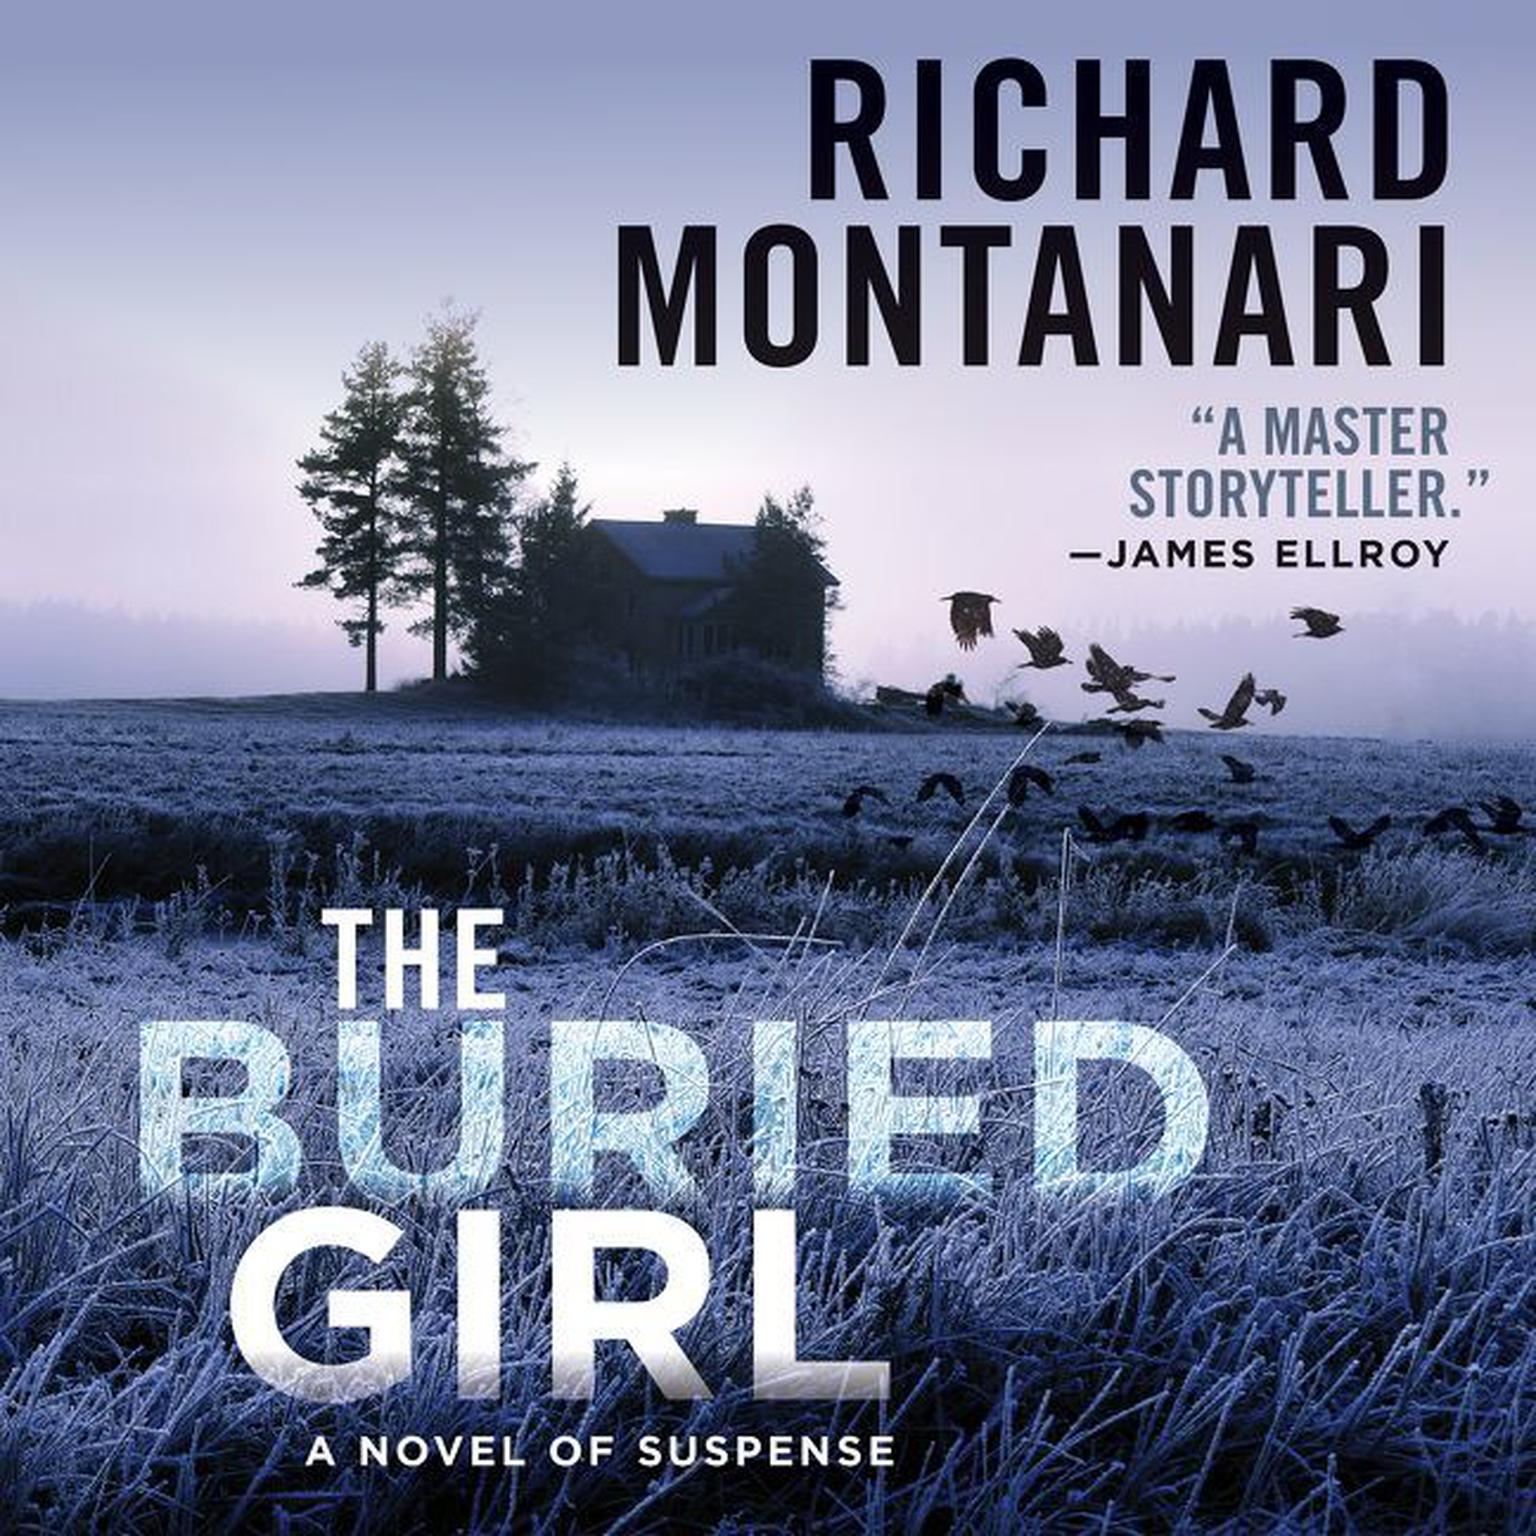 The Buried Girl: A Novel of Suspense Audiobook, by Richard Montanari